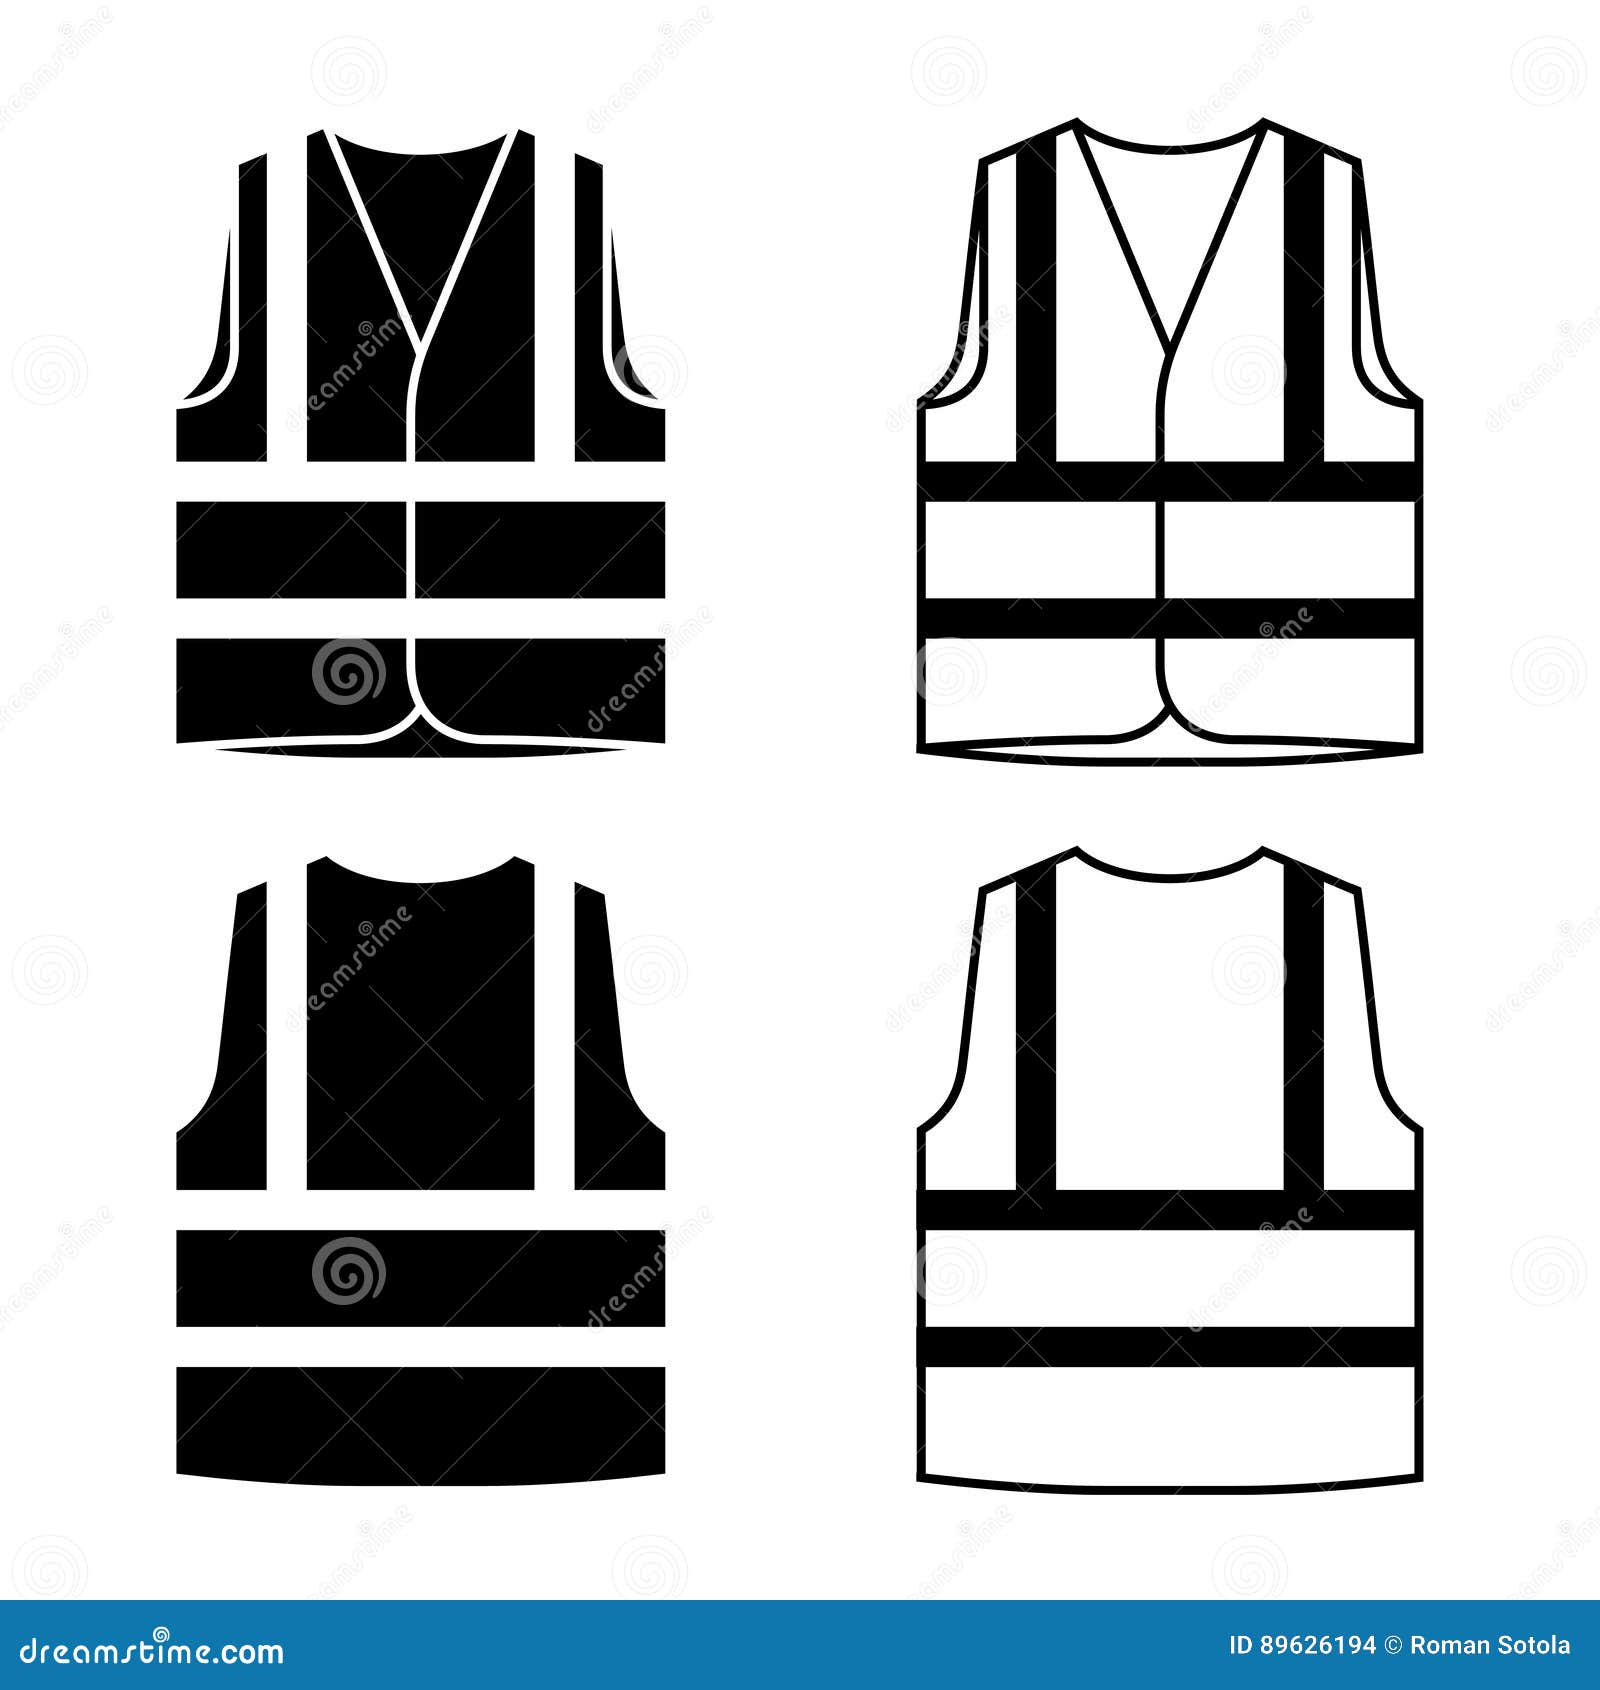 Reflective Safety Vest Black White Stock Vector - Illustration of